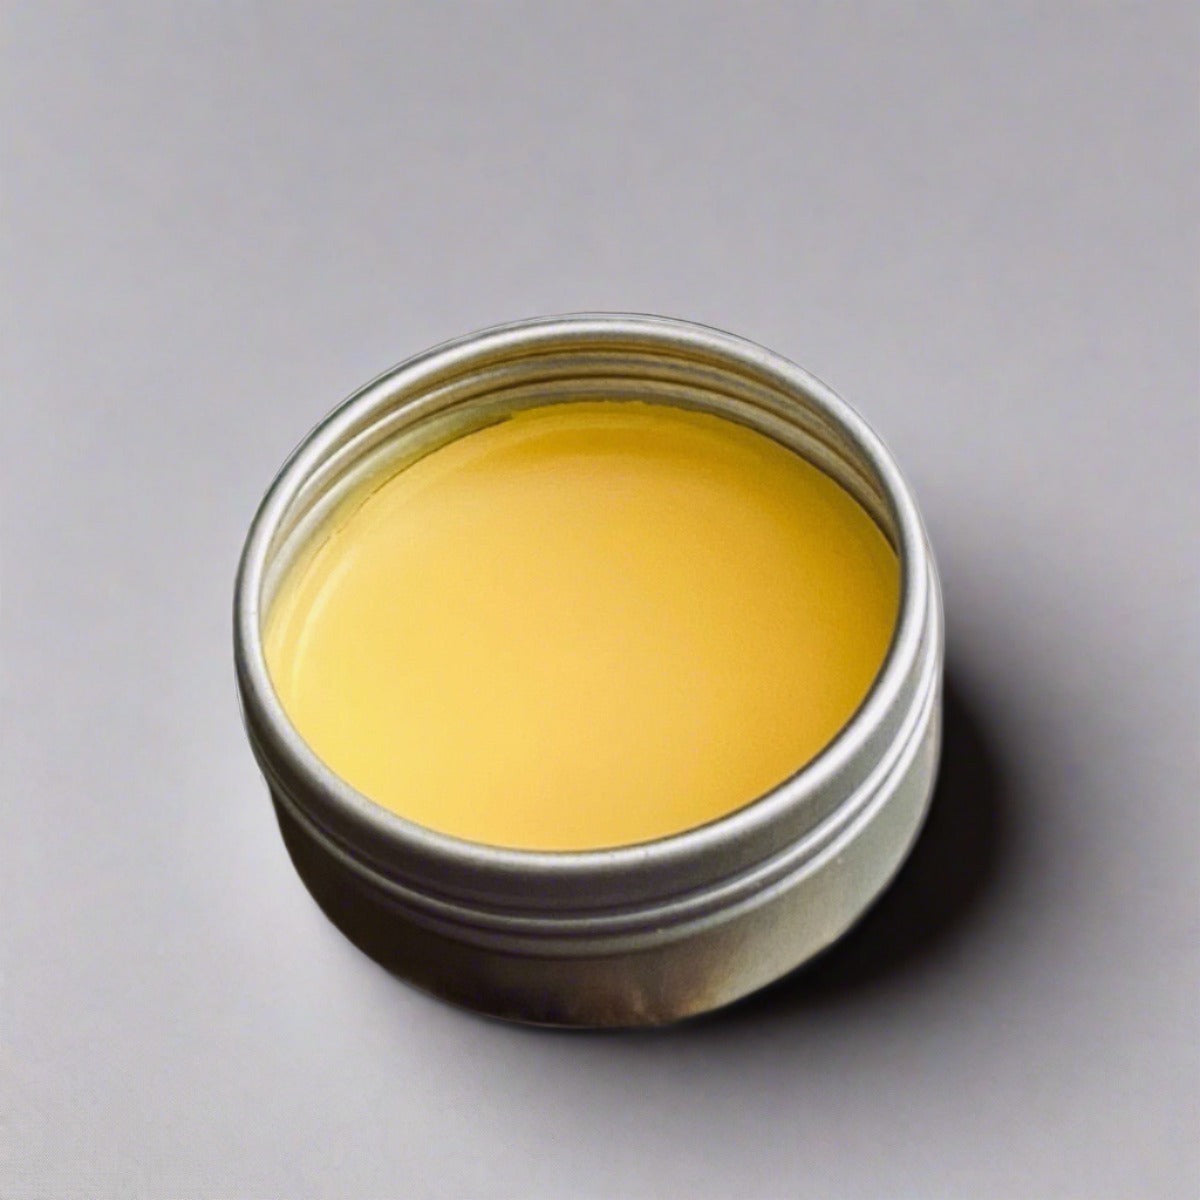 Organic orange butter highly moisturizing lip balm for chapped, dry lips